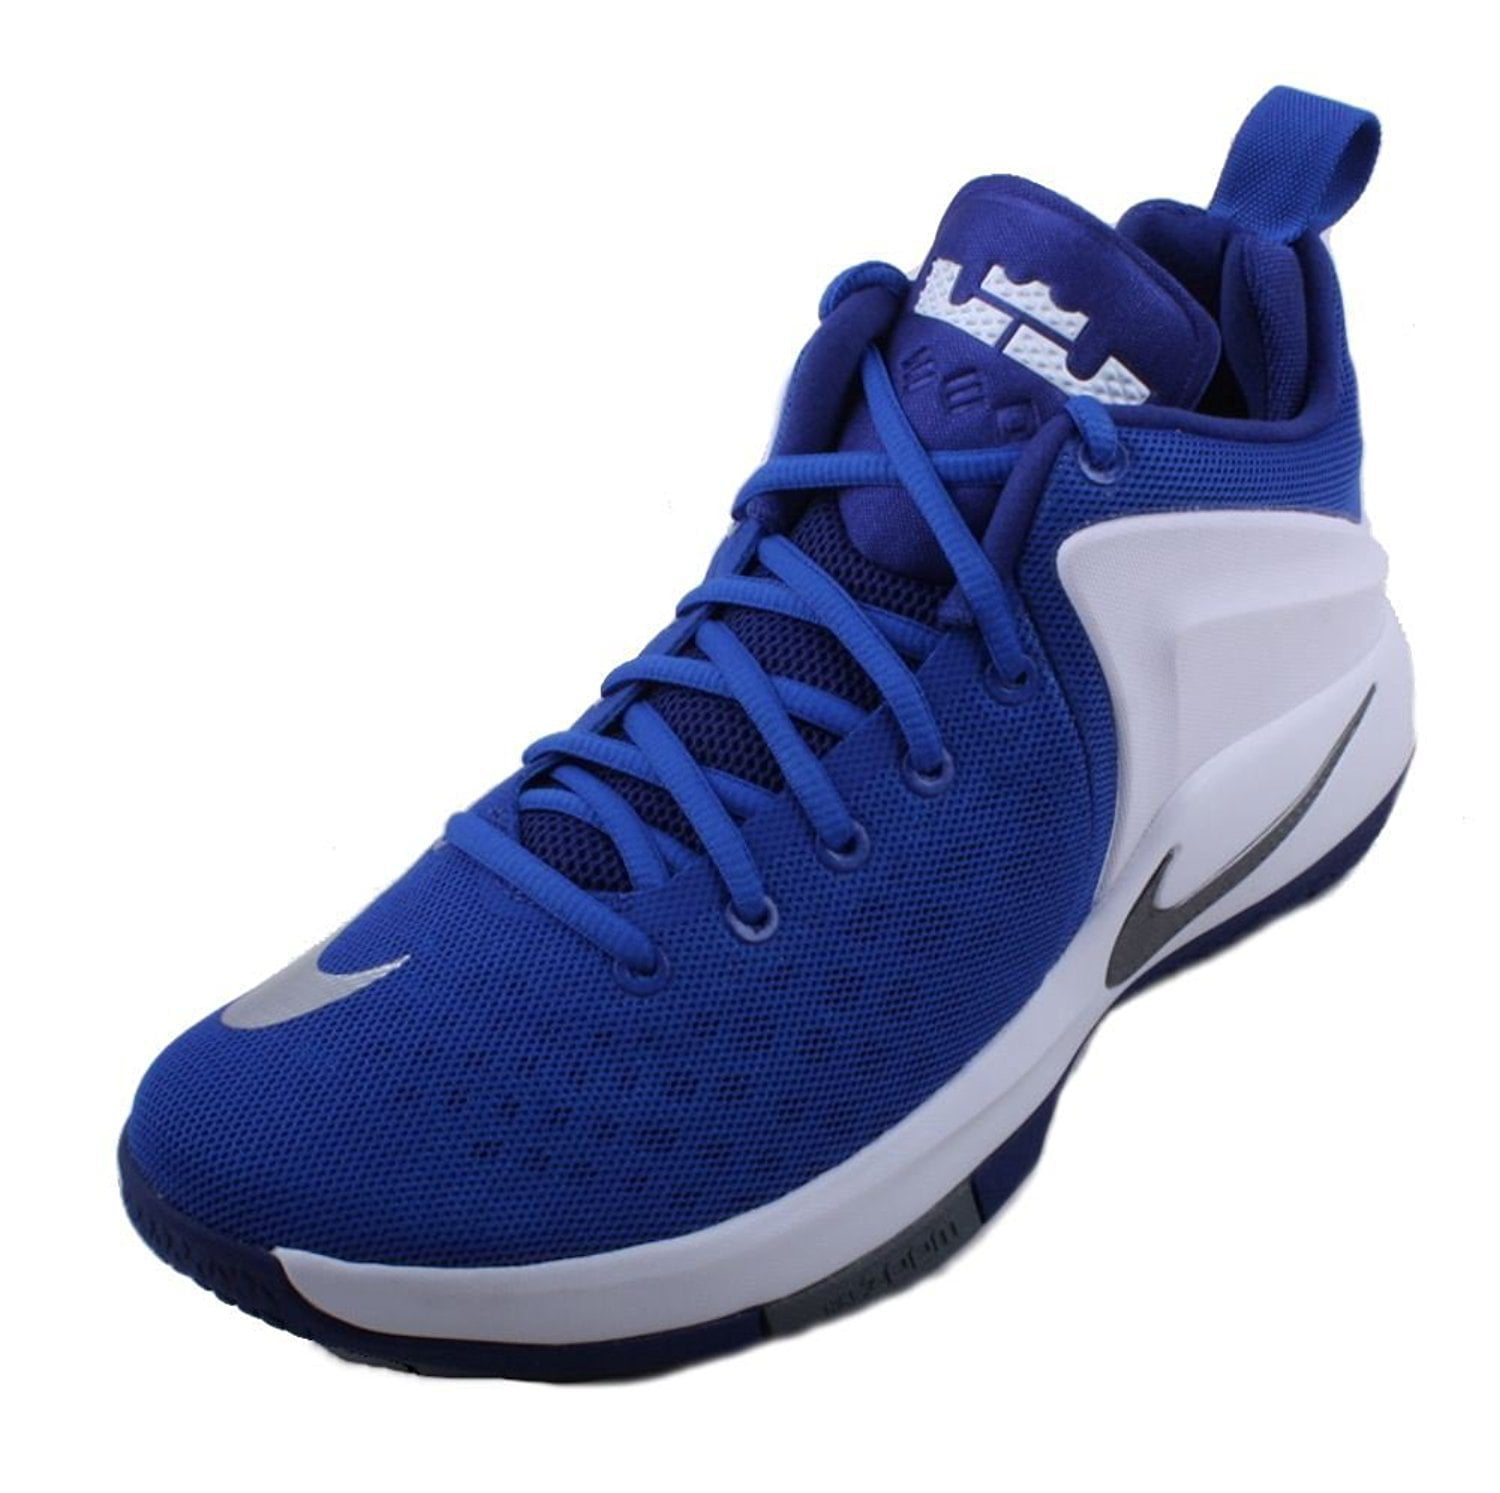 Nike - Nike Men's Zoom Witness Basketball Shoes-Blue - Walmart.com